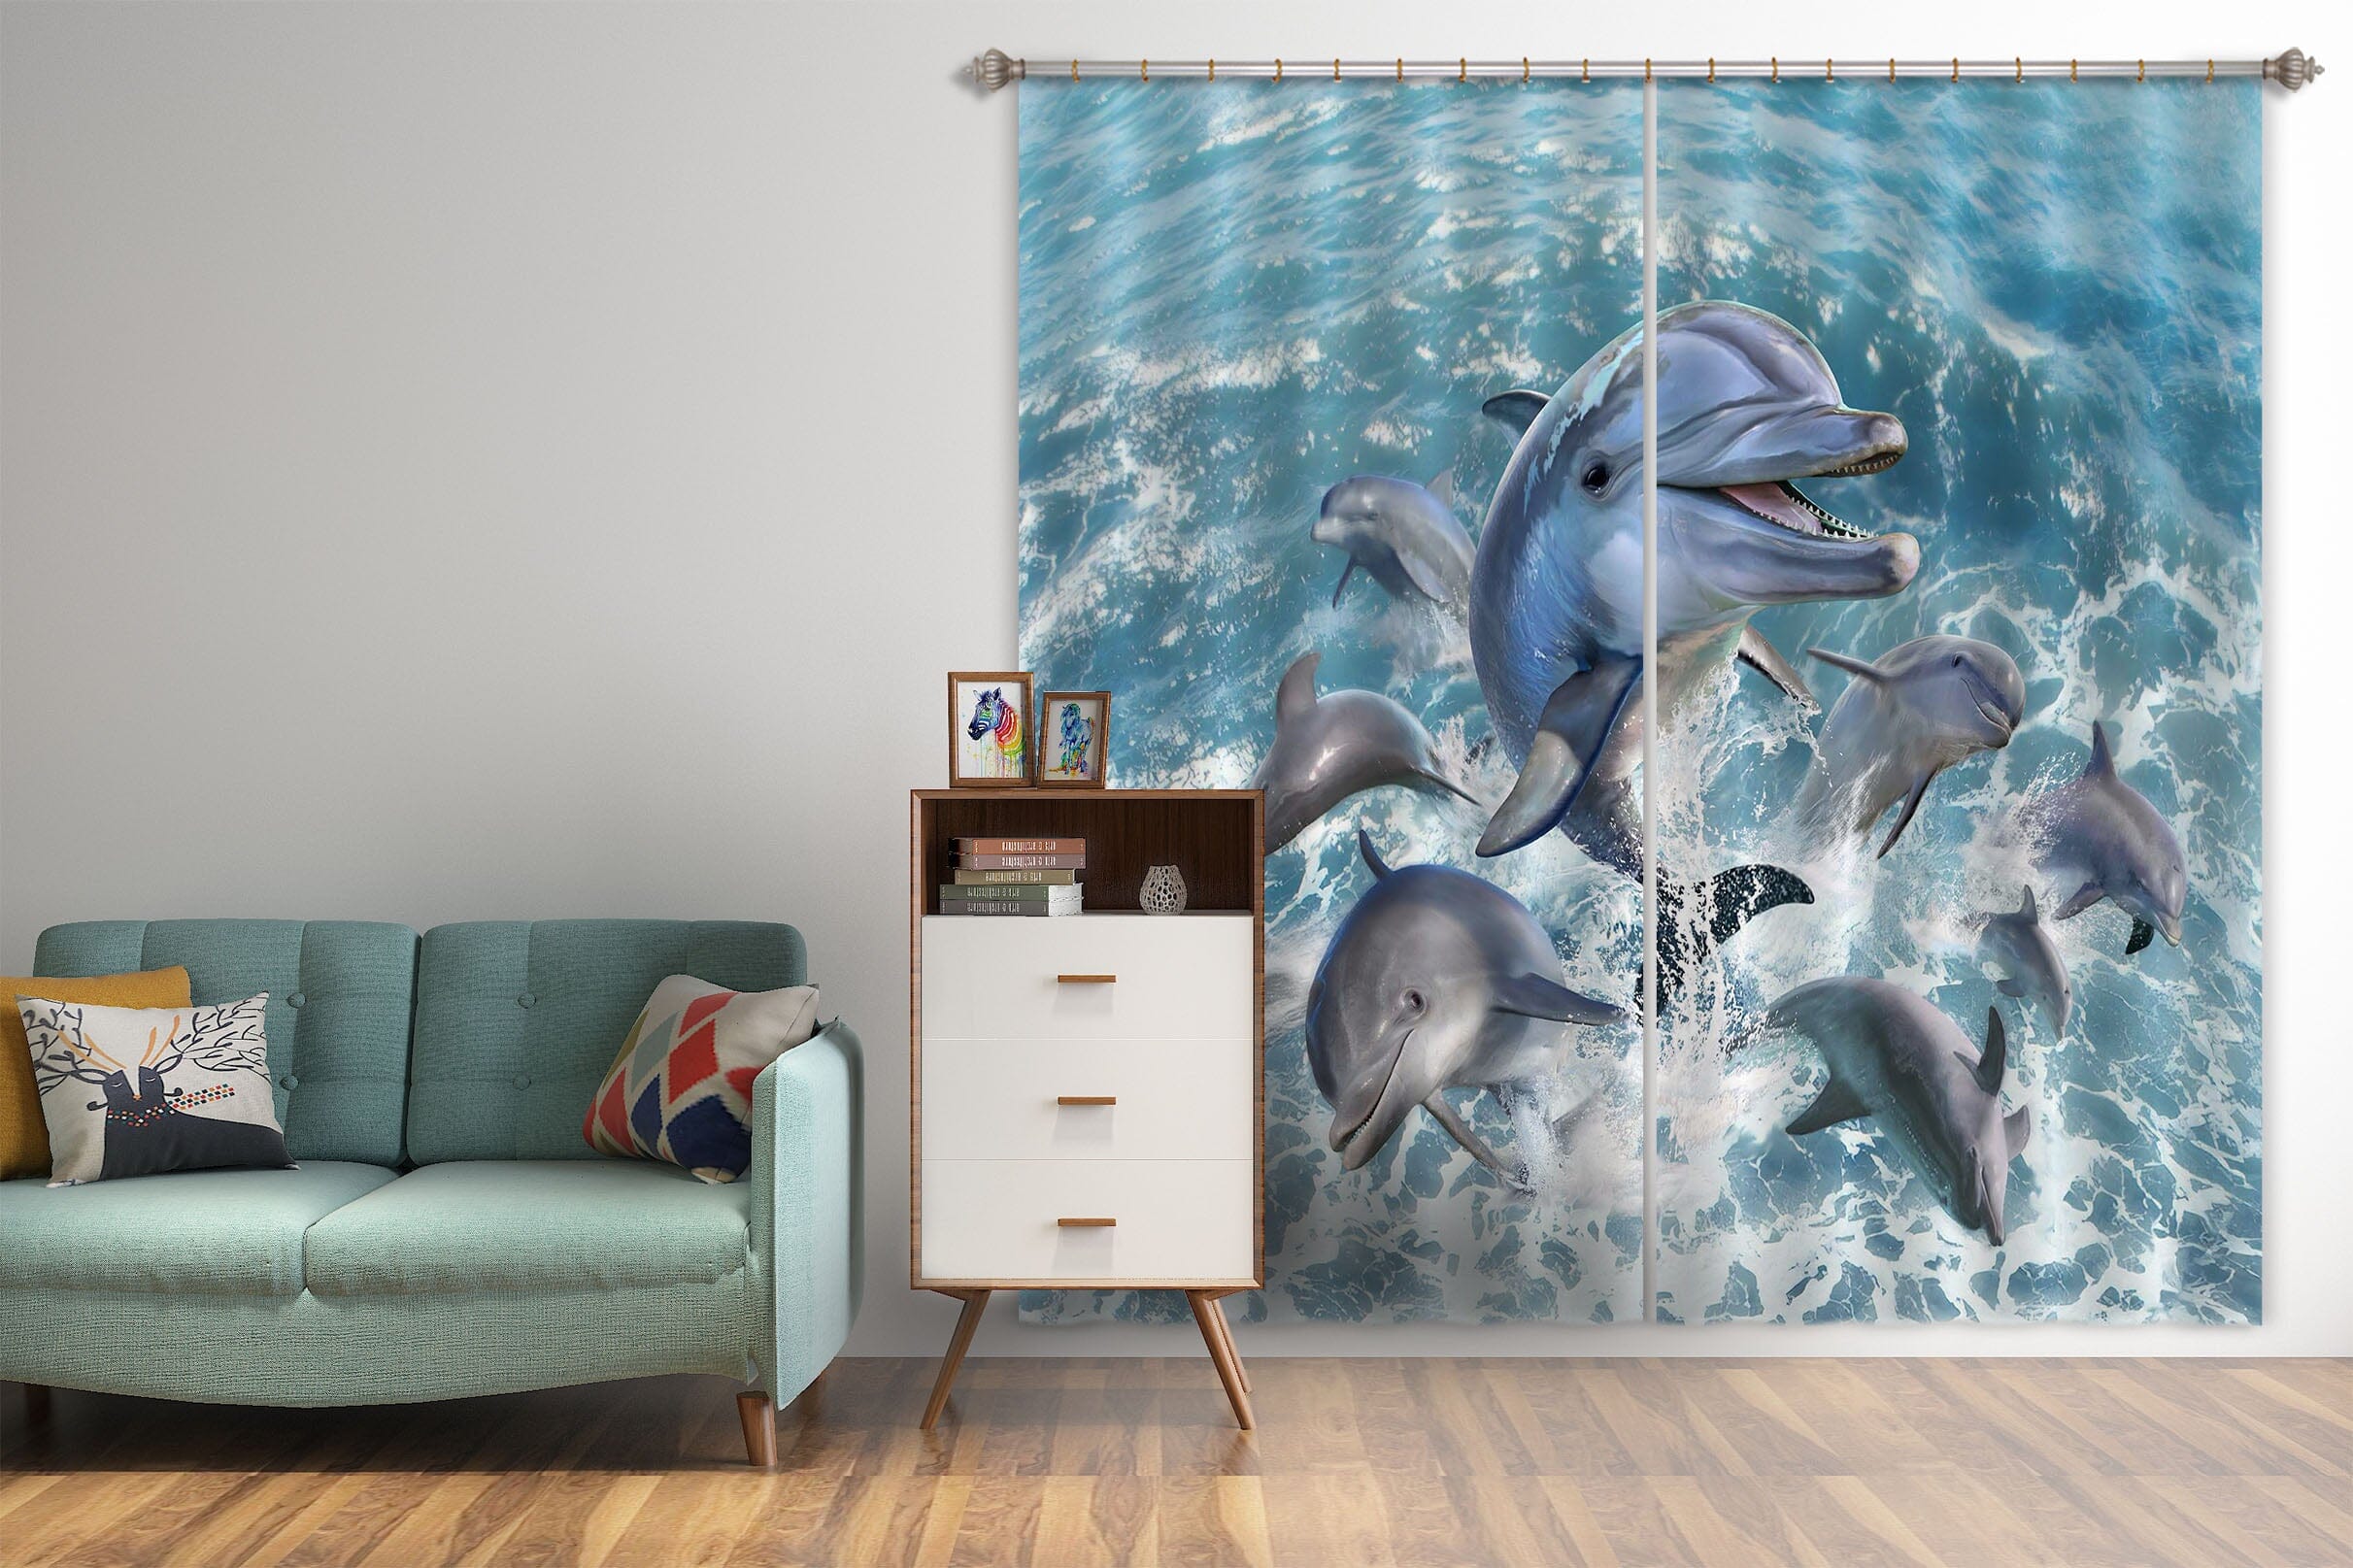 3D Dolphin Jump 042 Jerry LoFaro Curtain Curtains Drapes Curtains AJ Creativity Home 